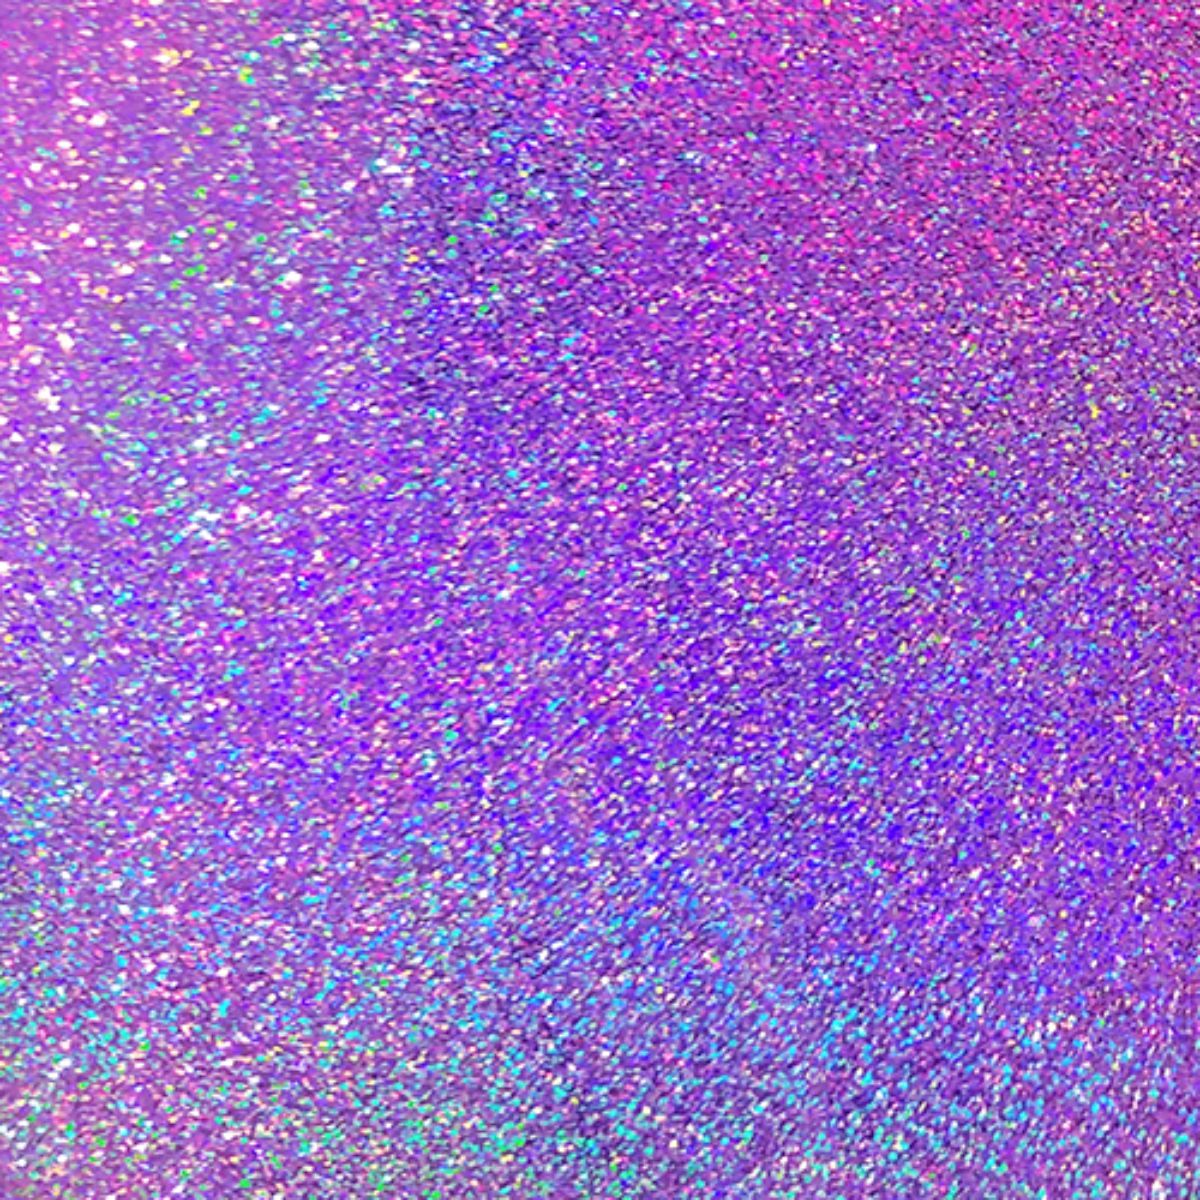 Holo Glitter Violet - CraftCutterSupply.com